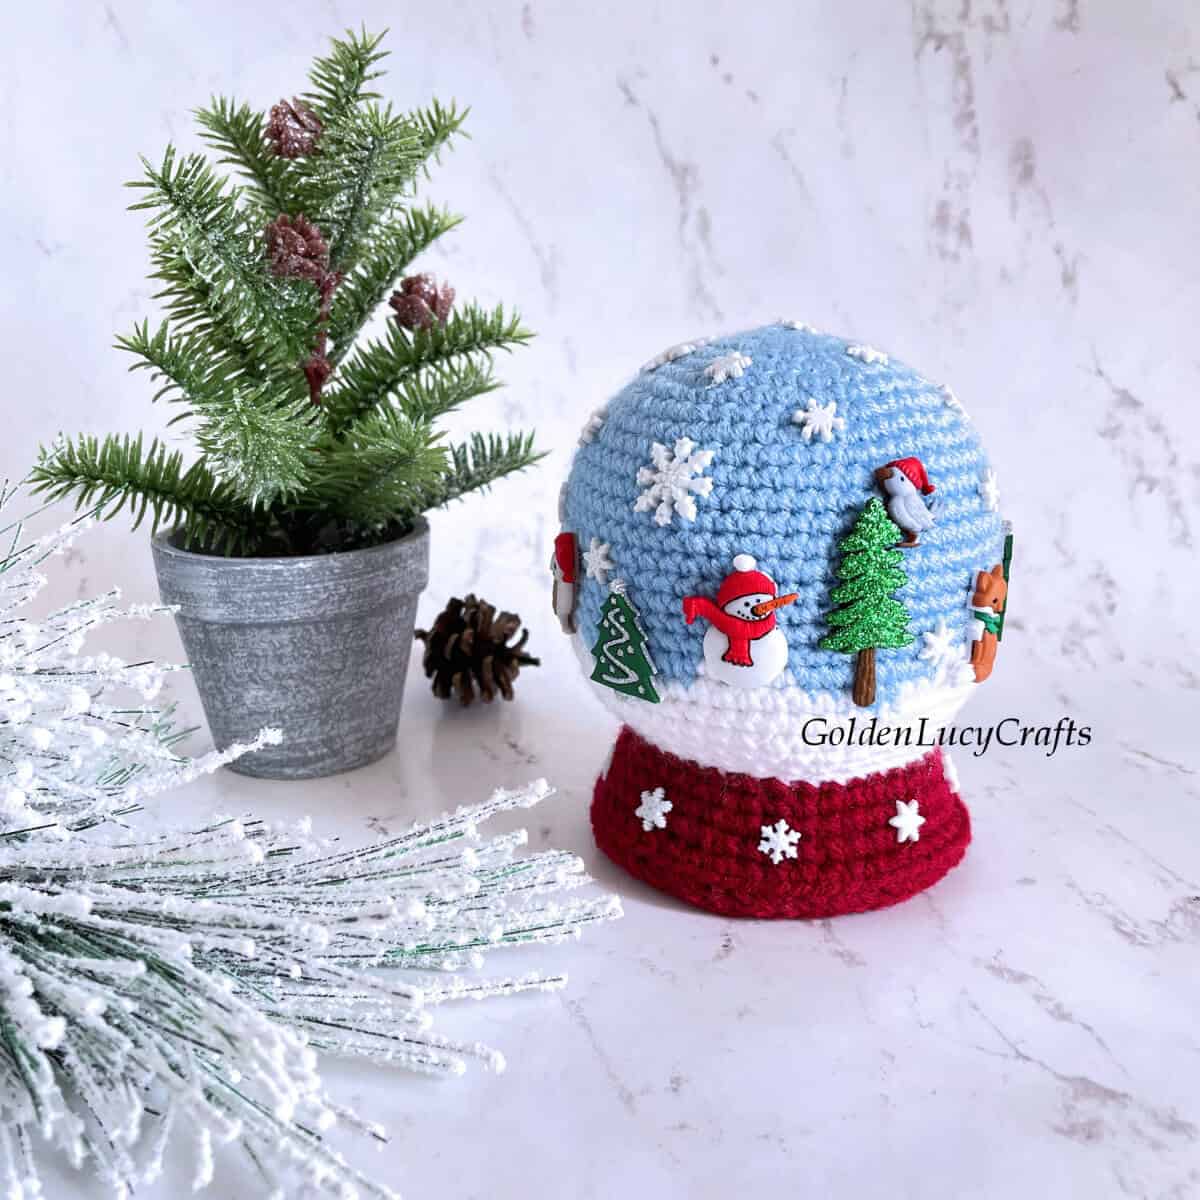 Creative Snow Globe Button Crafts Using Crochet Pattern